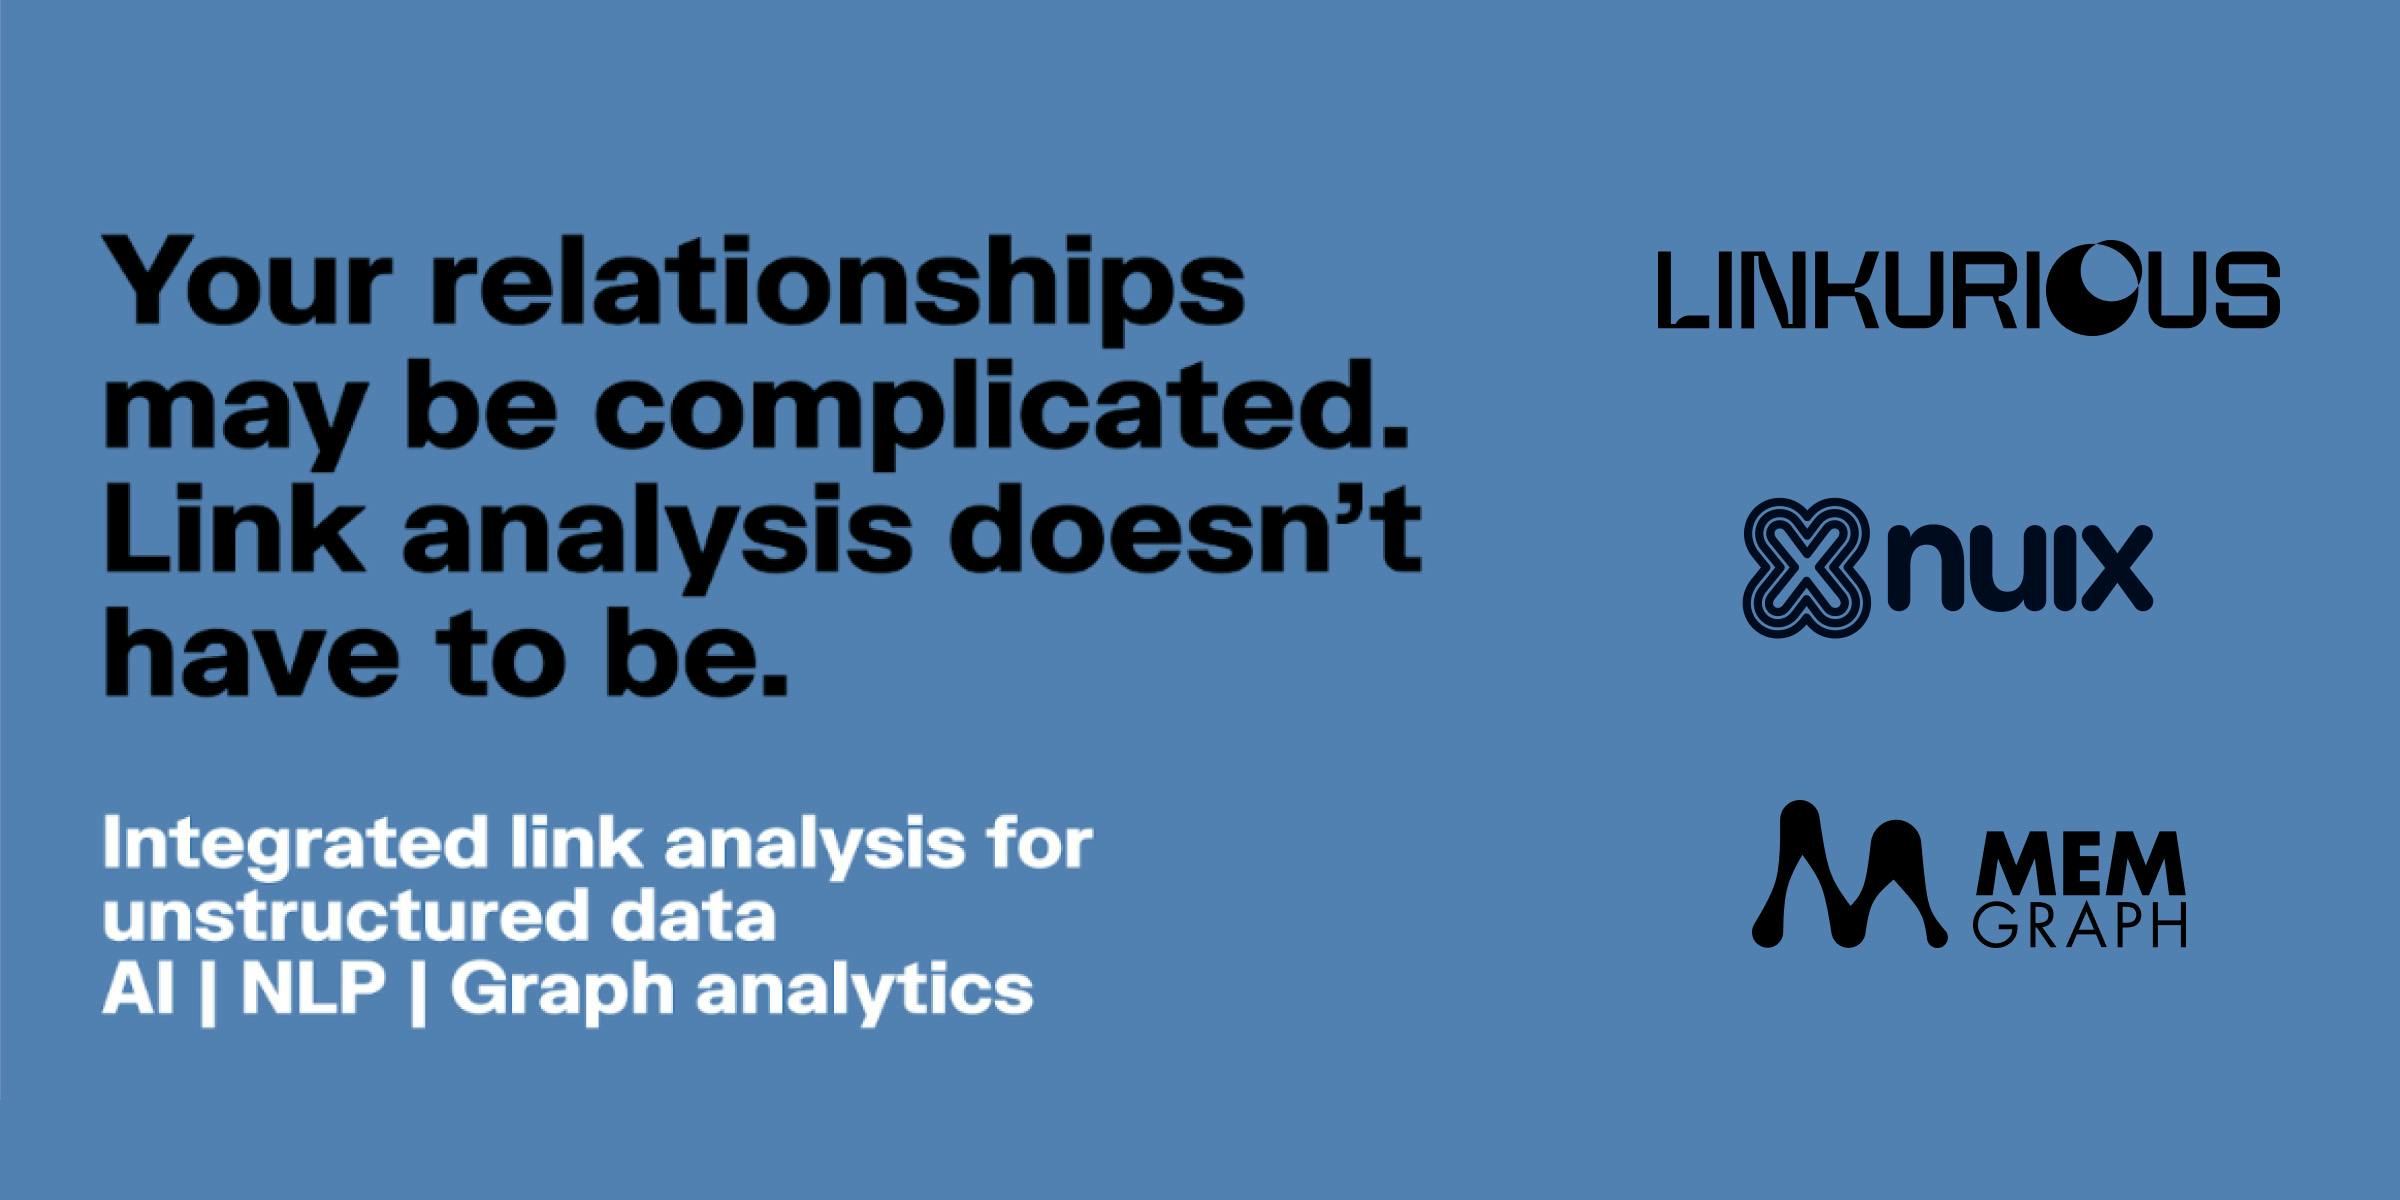 Nuix and Linkurious join Memgraph on the Gartner Data & Analytics Summit!